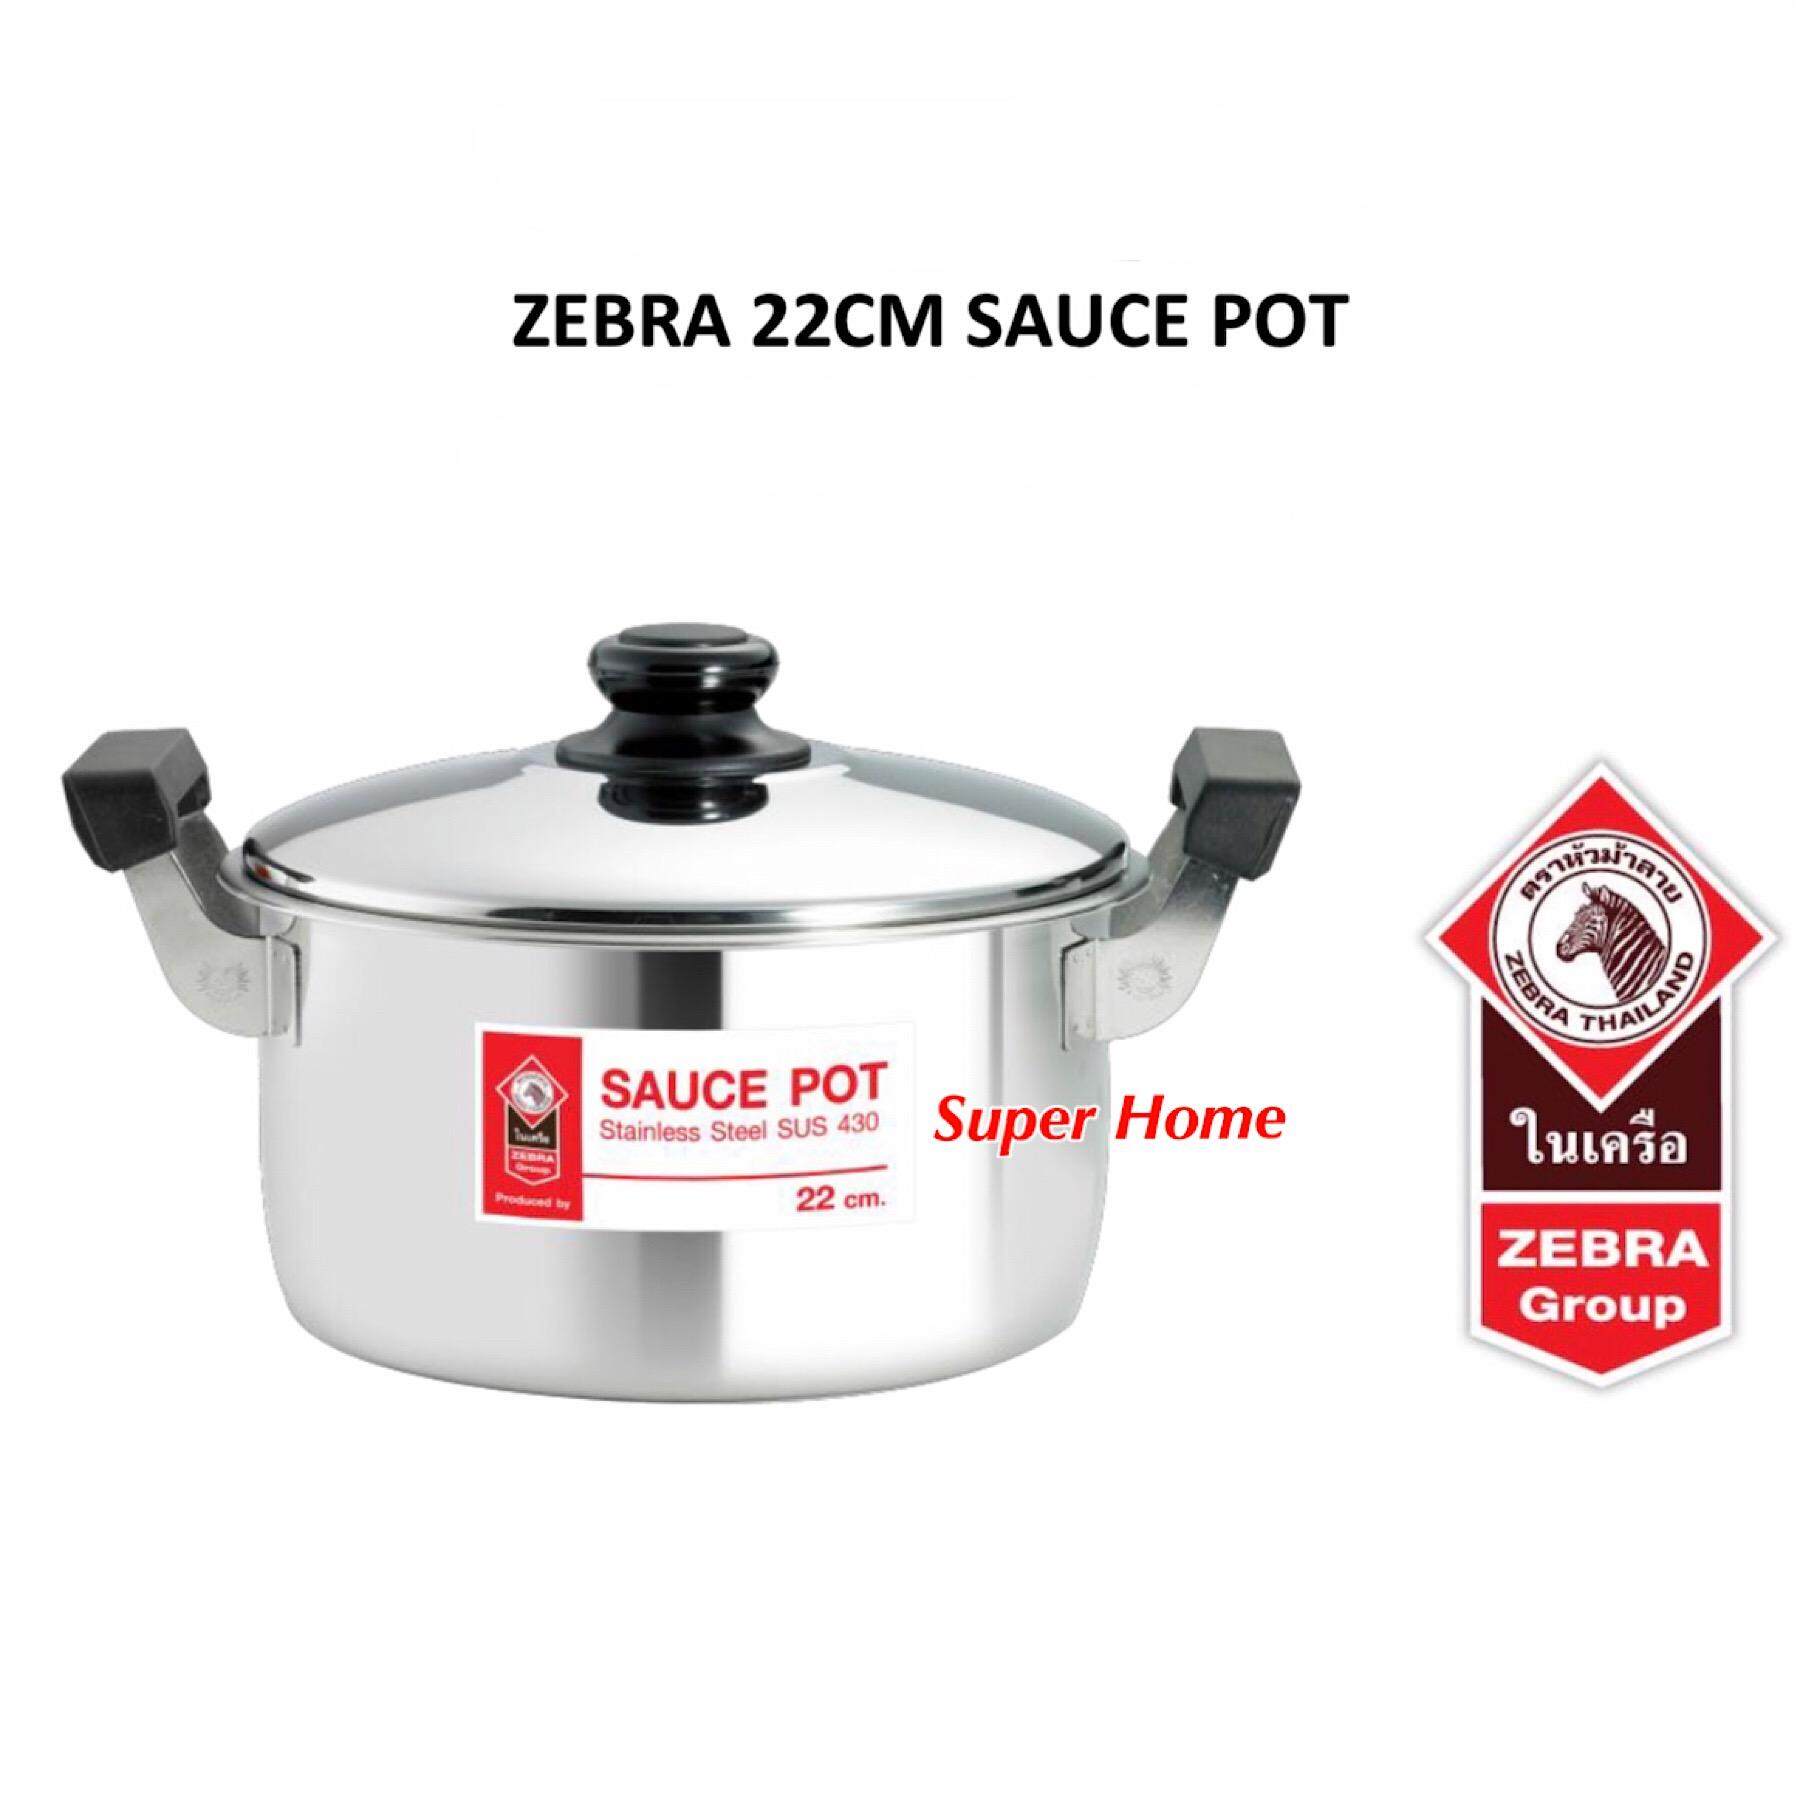 Zebra Sauce Pot 22cm Stainless Steel SUS 430 (Daikin's Special Edition)